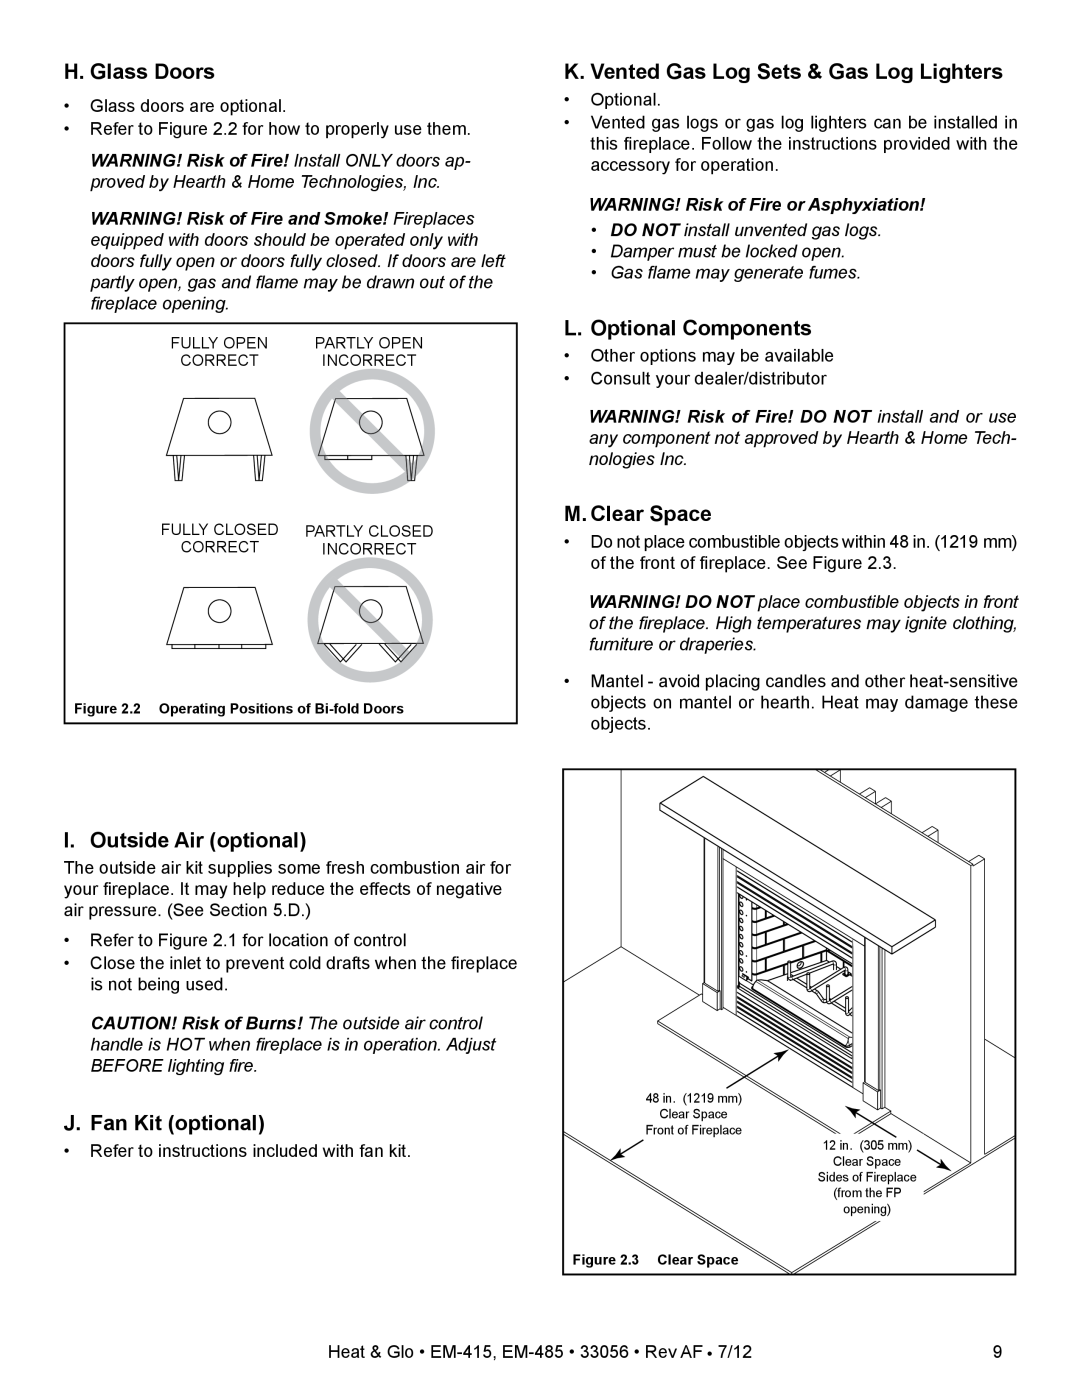 Heat & Glo LifeStyle EM-485T - 42 H. Glass Doors, K. Vented Gas Log Sets & Gas Log Lighters, L. Optional Components 